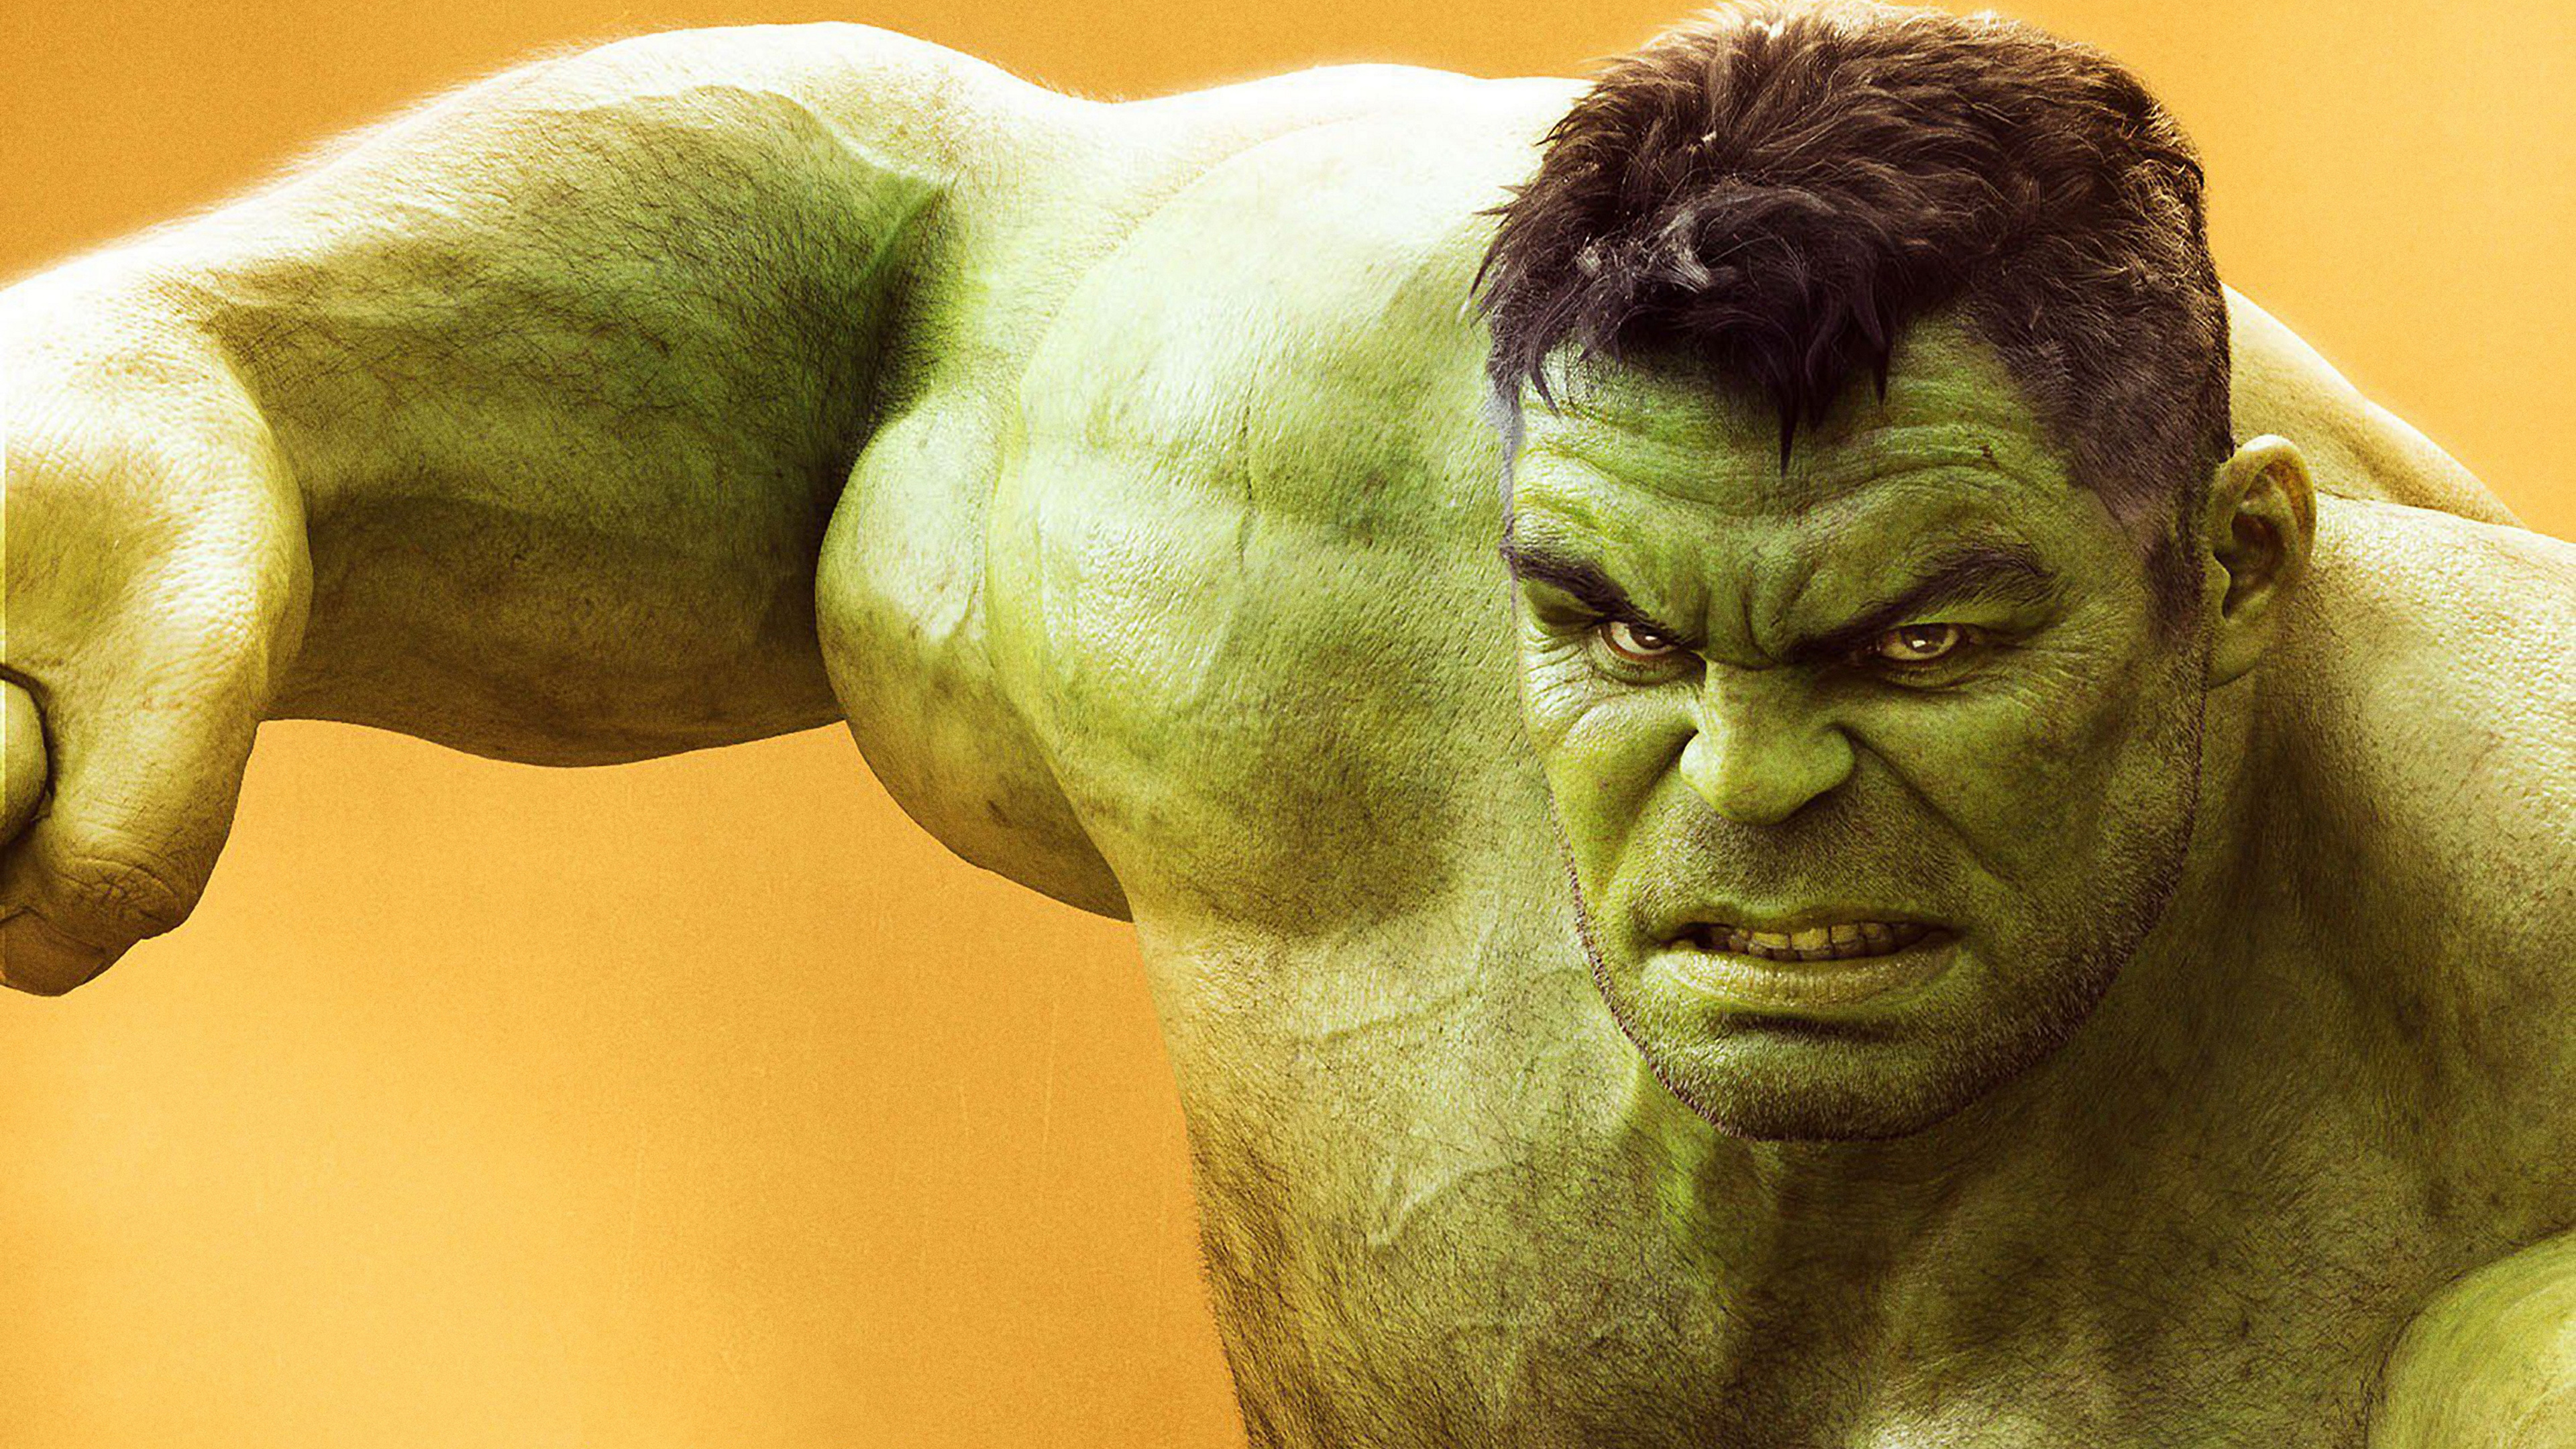 Hulk in Avengers Infinity War 4K